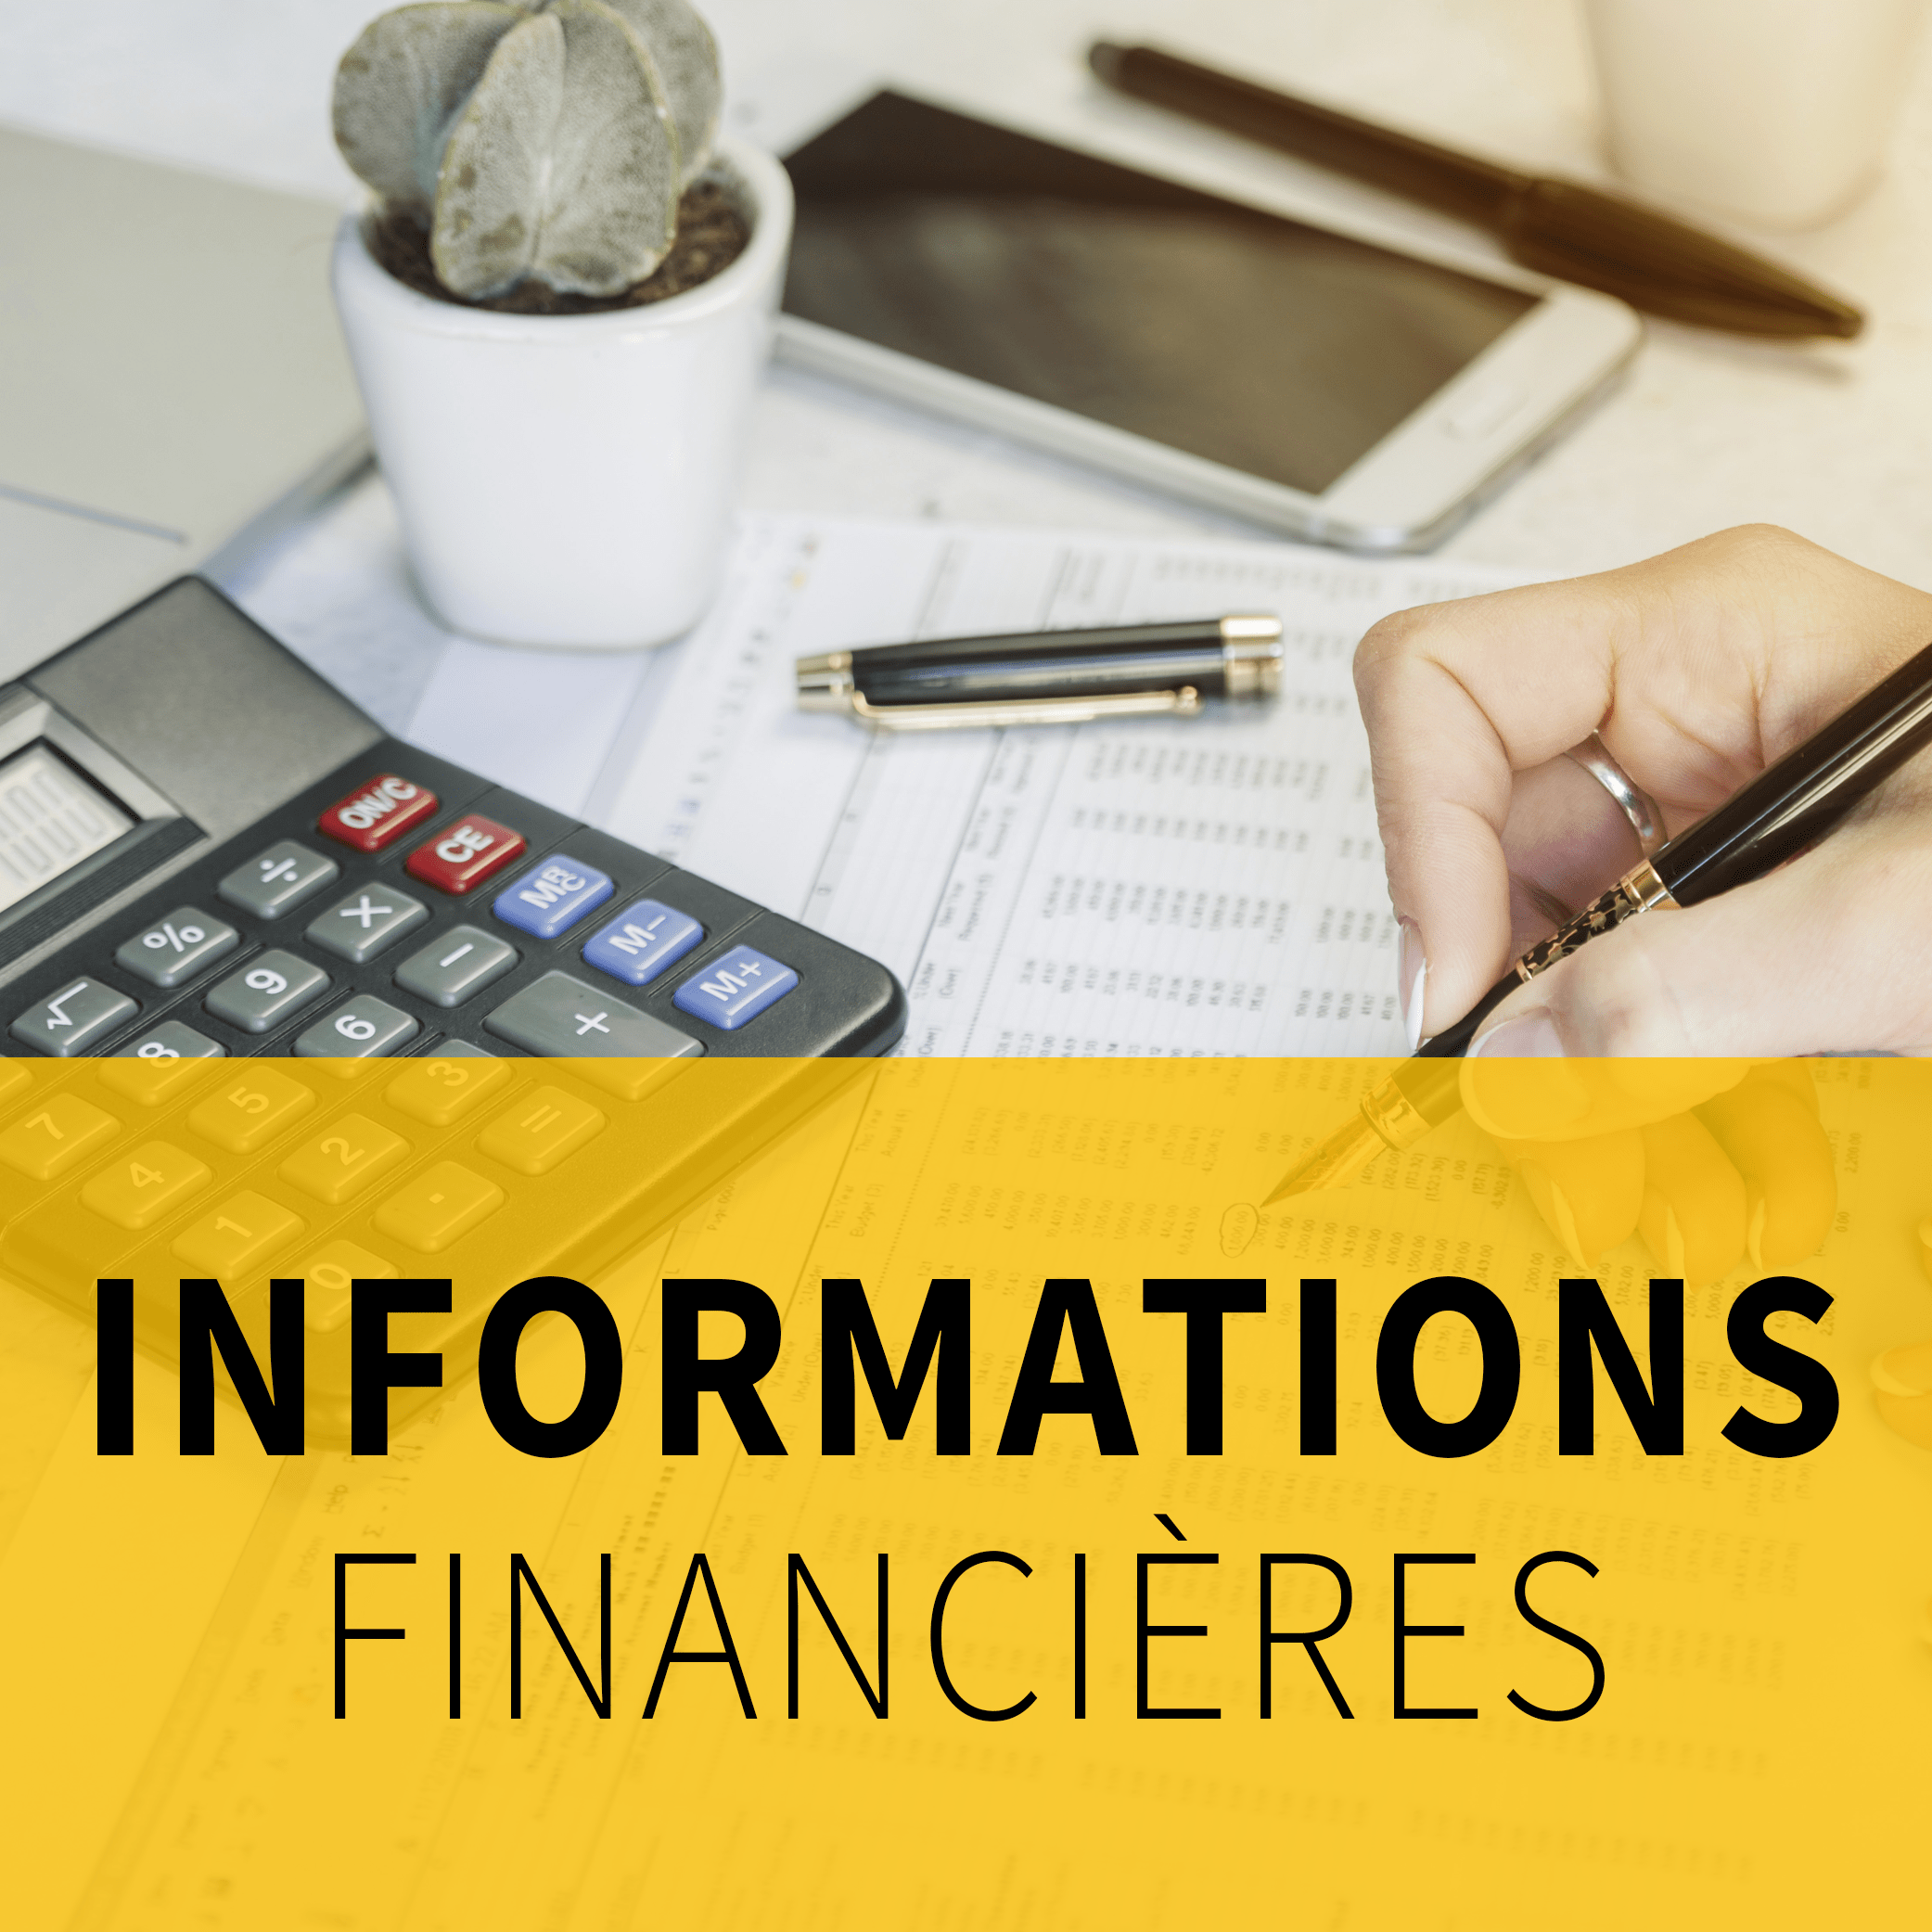 info_finance-min.png